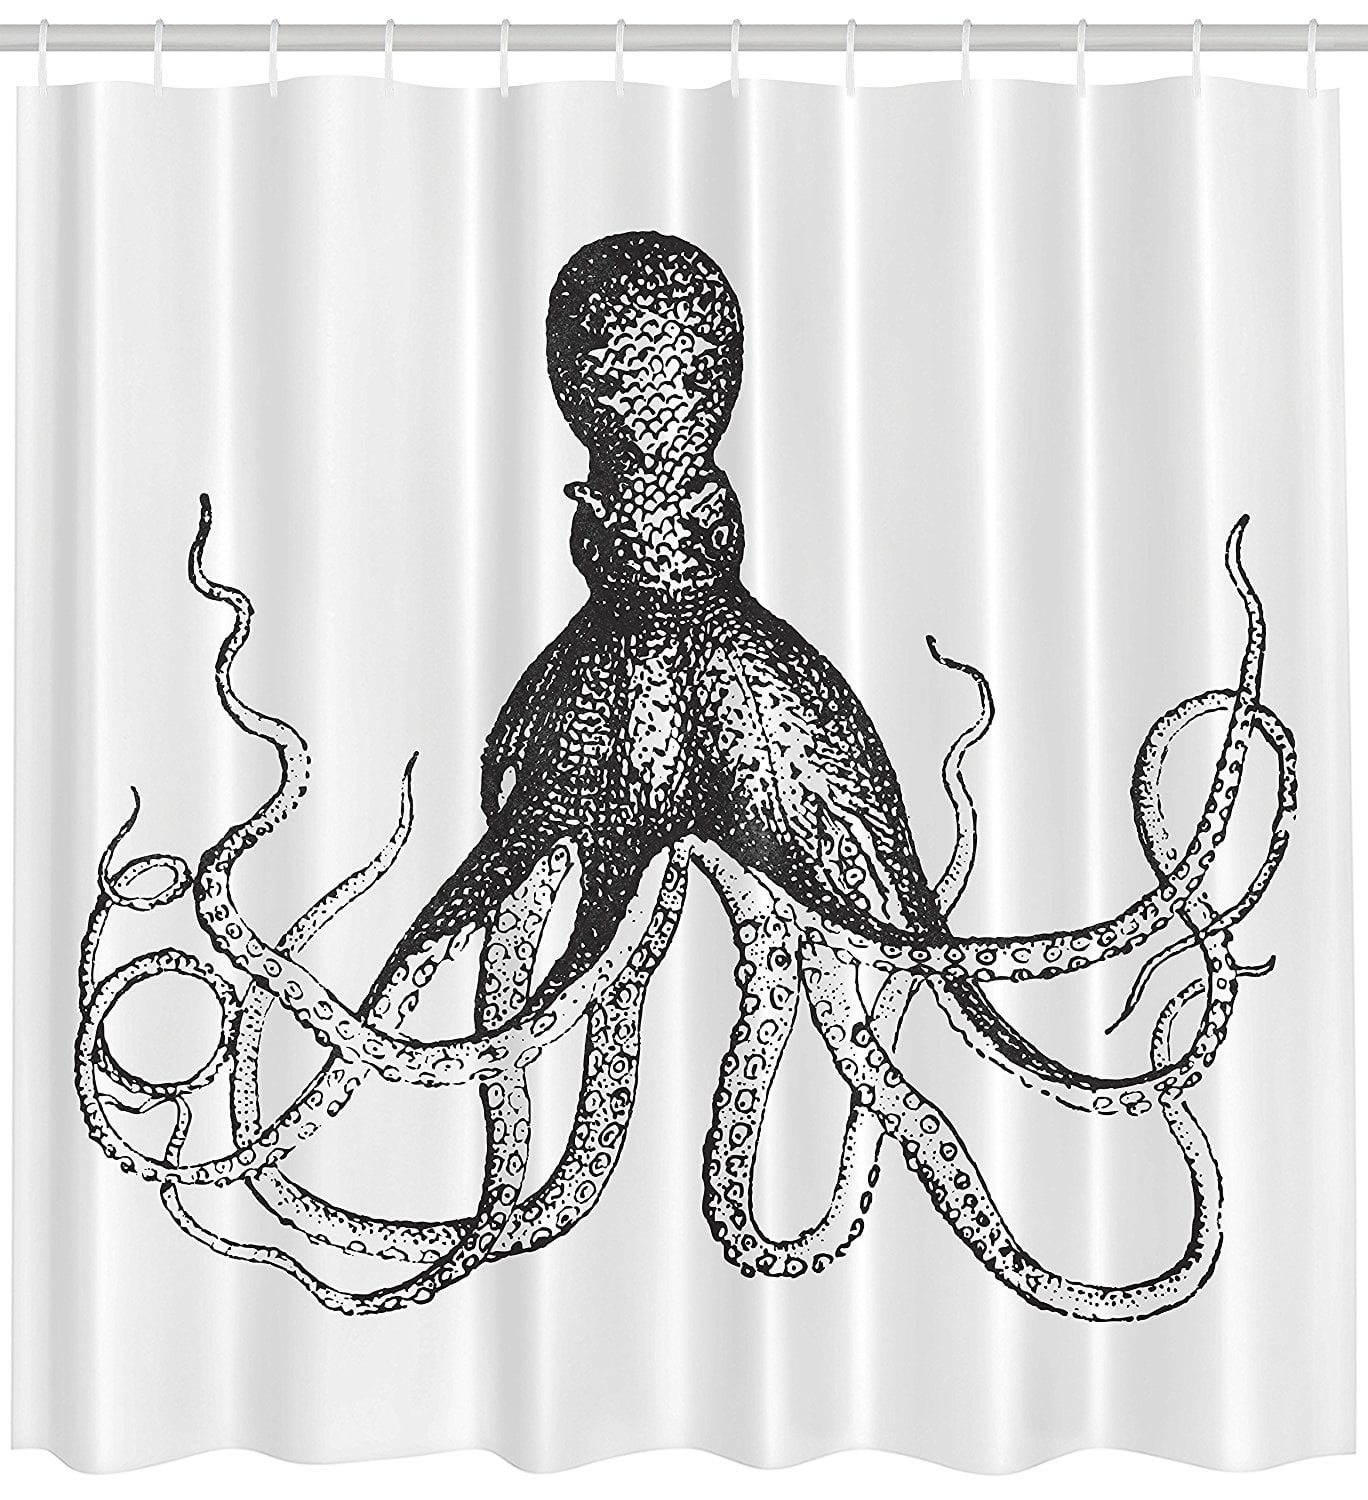 The Octopus Theme Waterproof Fabric Home Decor Shower Curtain Bathroom Mat 